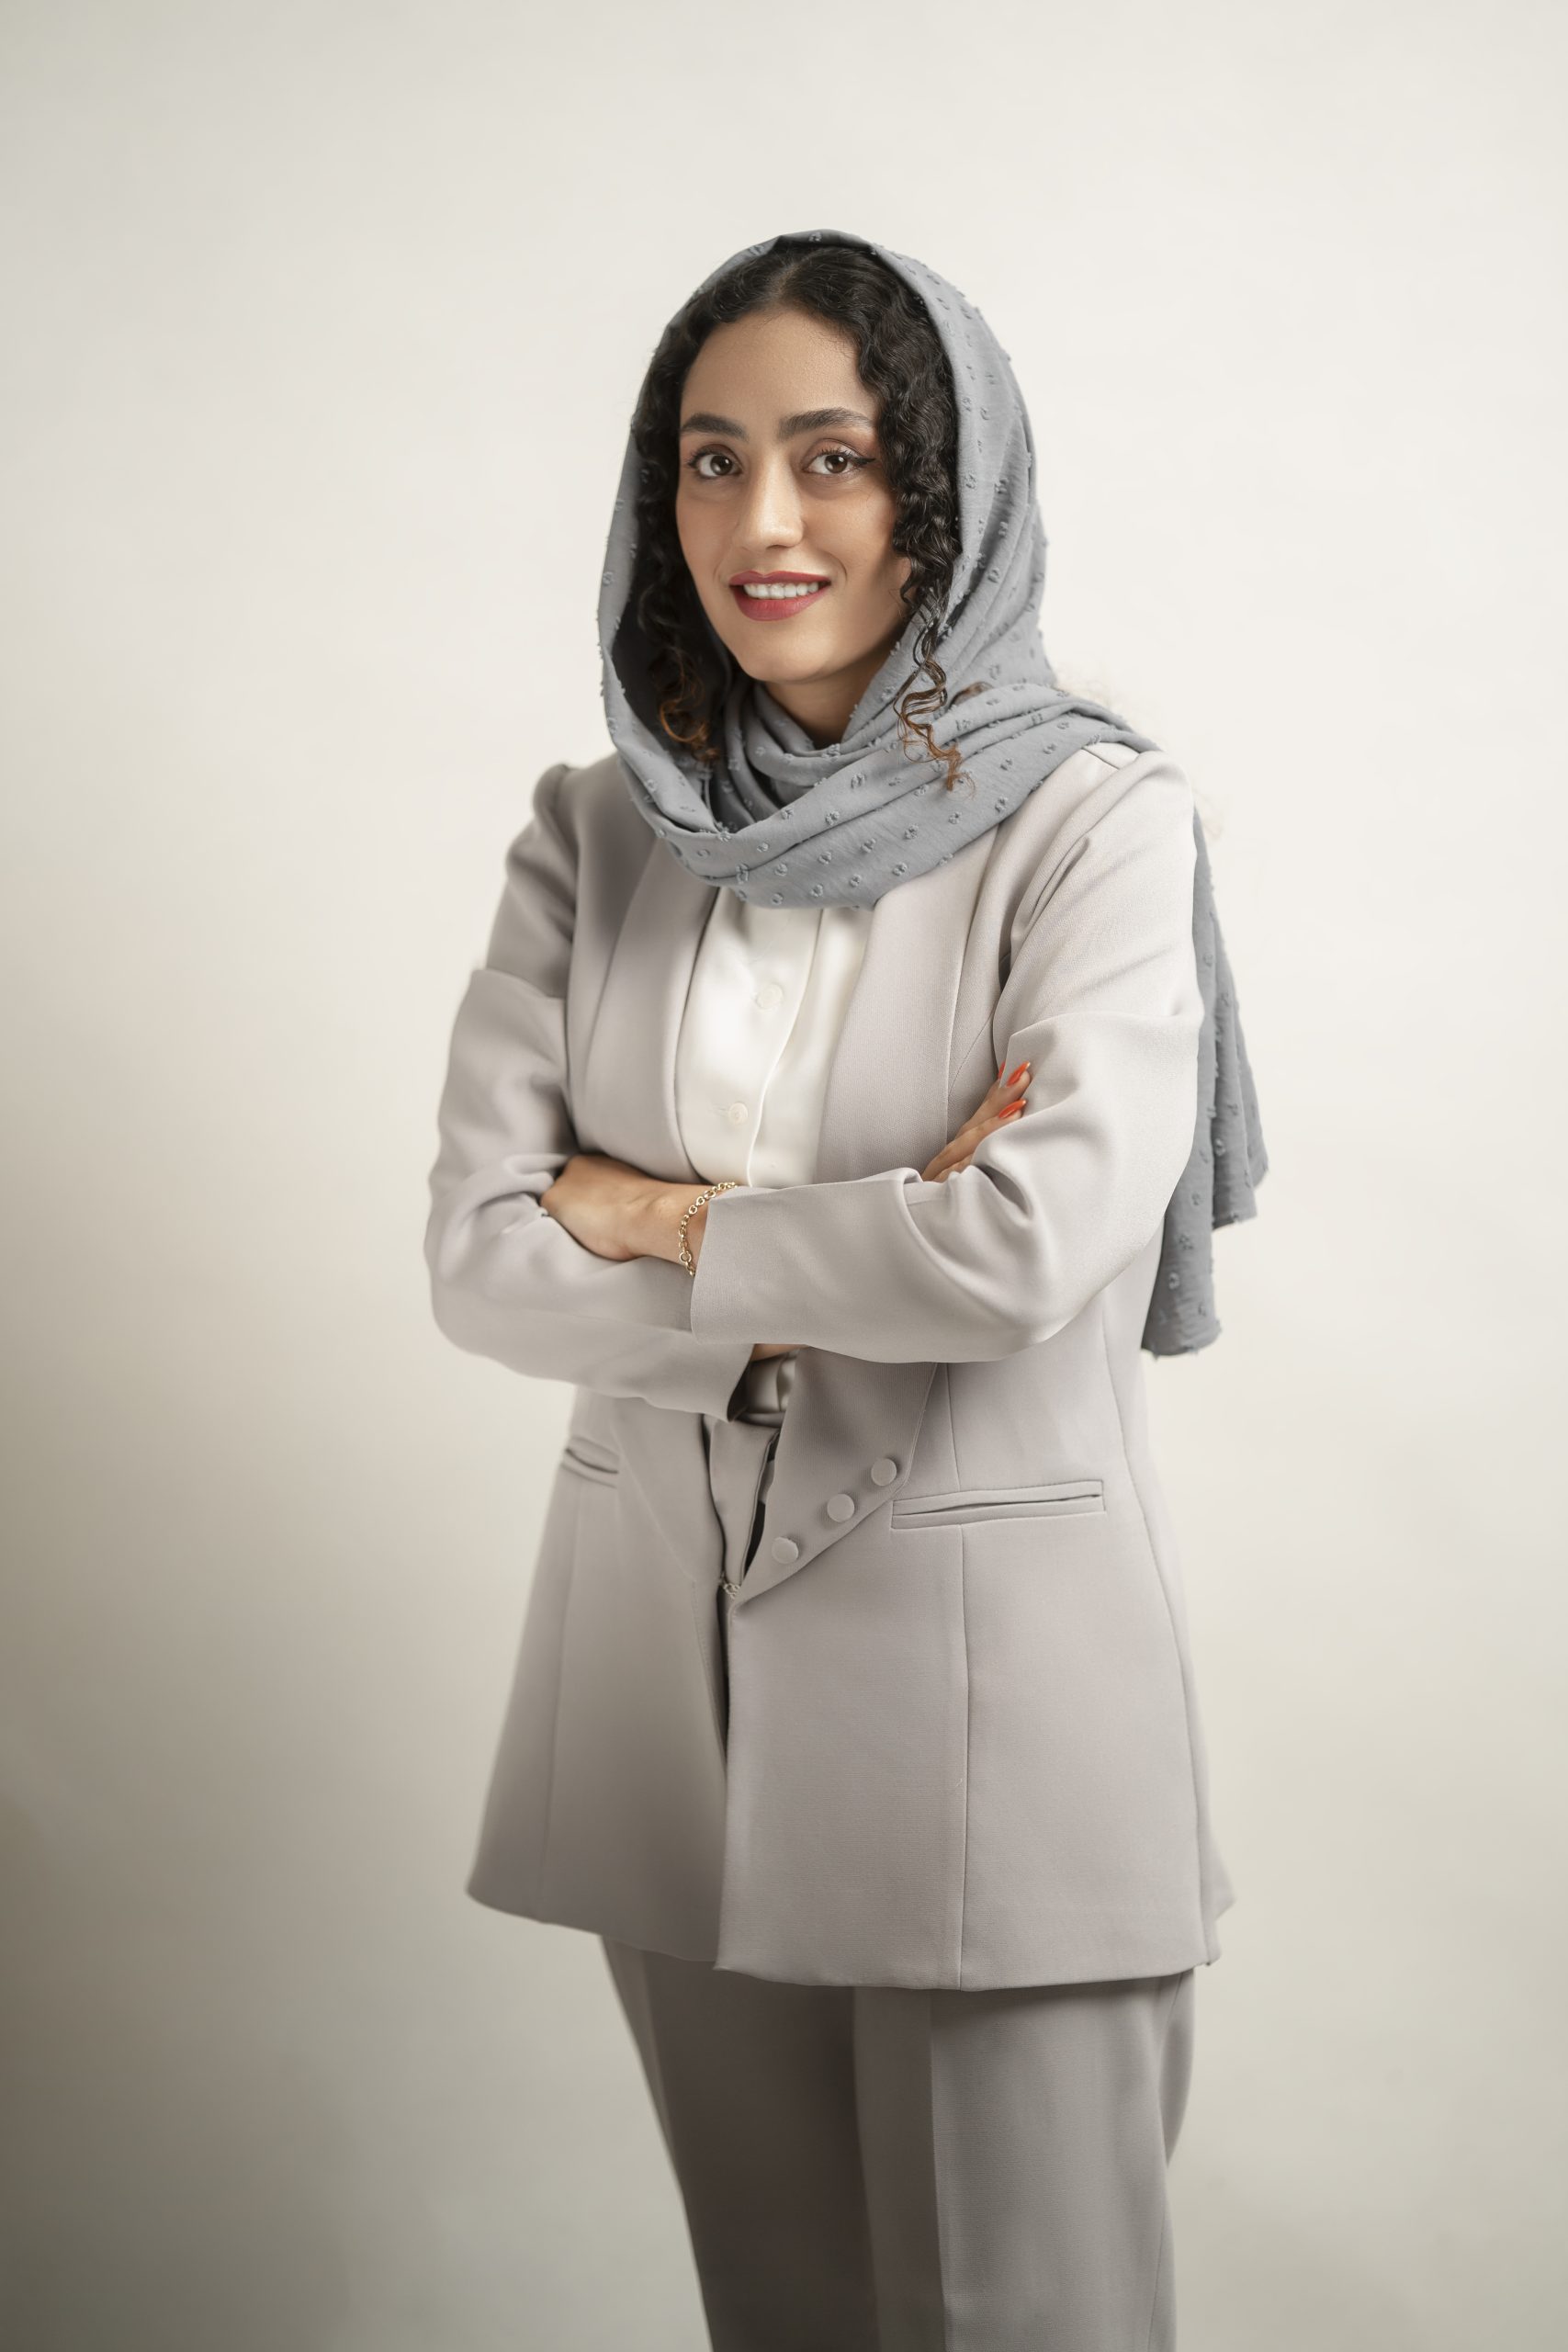 فاطمه زهرا احمدی،طراح